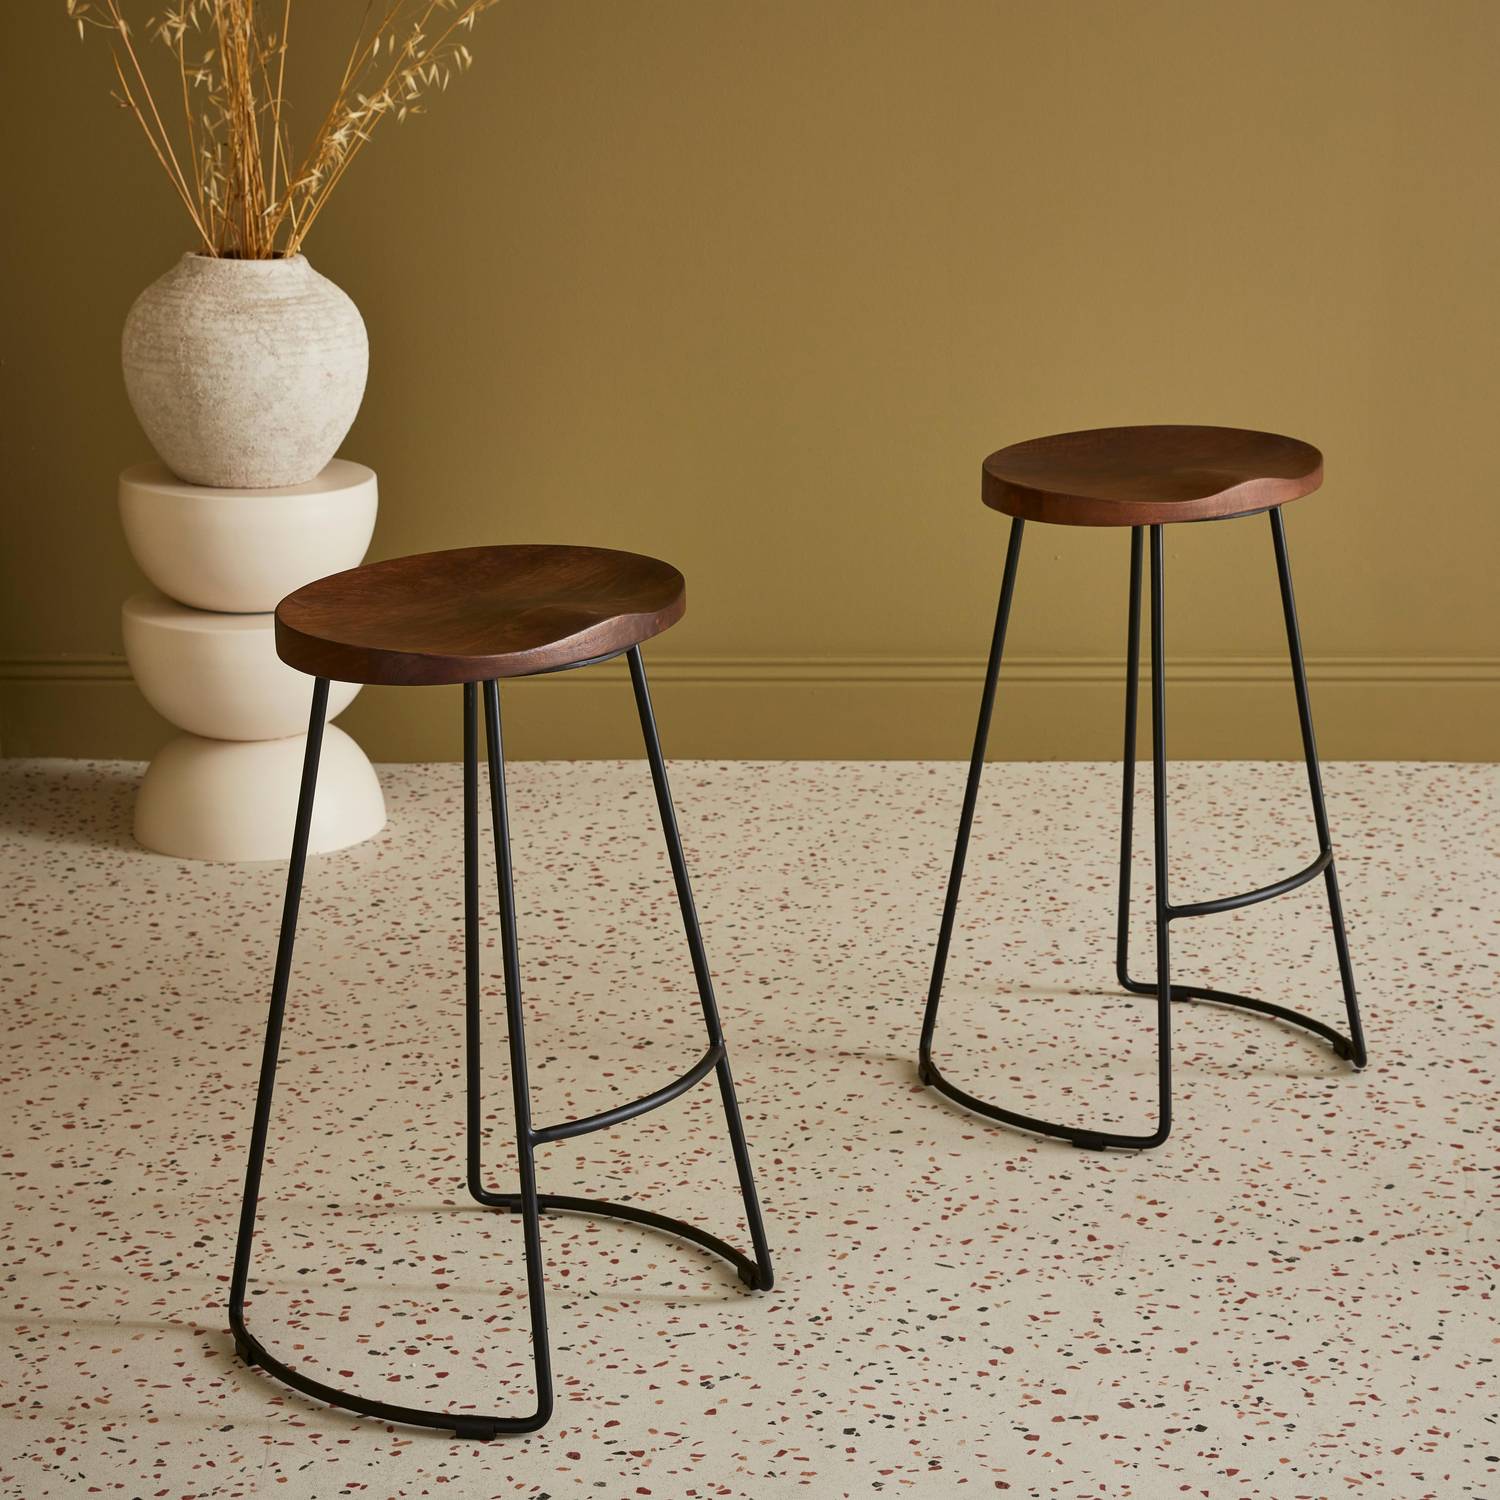 Pair of industrial metal and wooden bar stools, 44x36x65cm, Jaya, Light Walnut, Mango wood seat, black metal legs Photo2